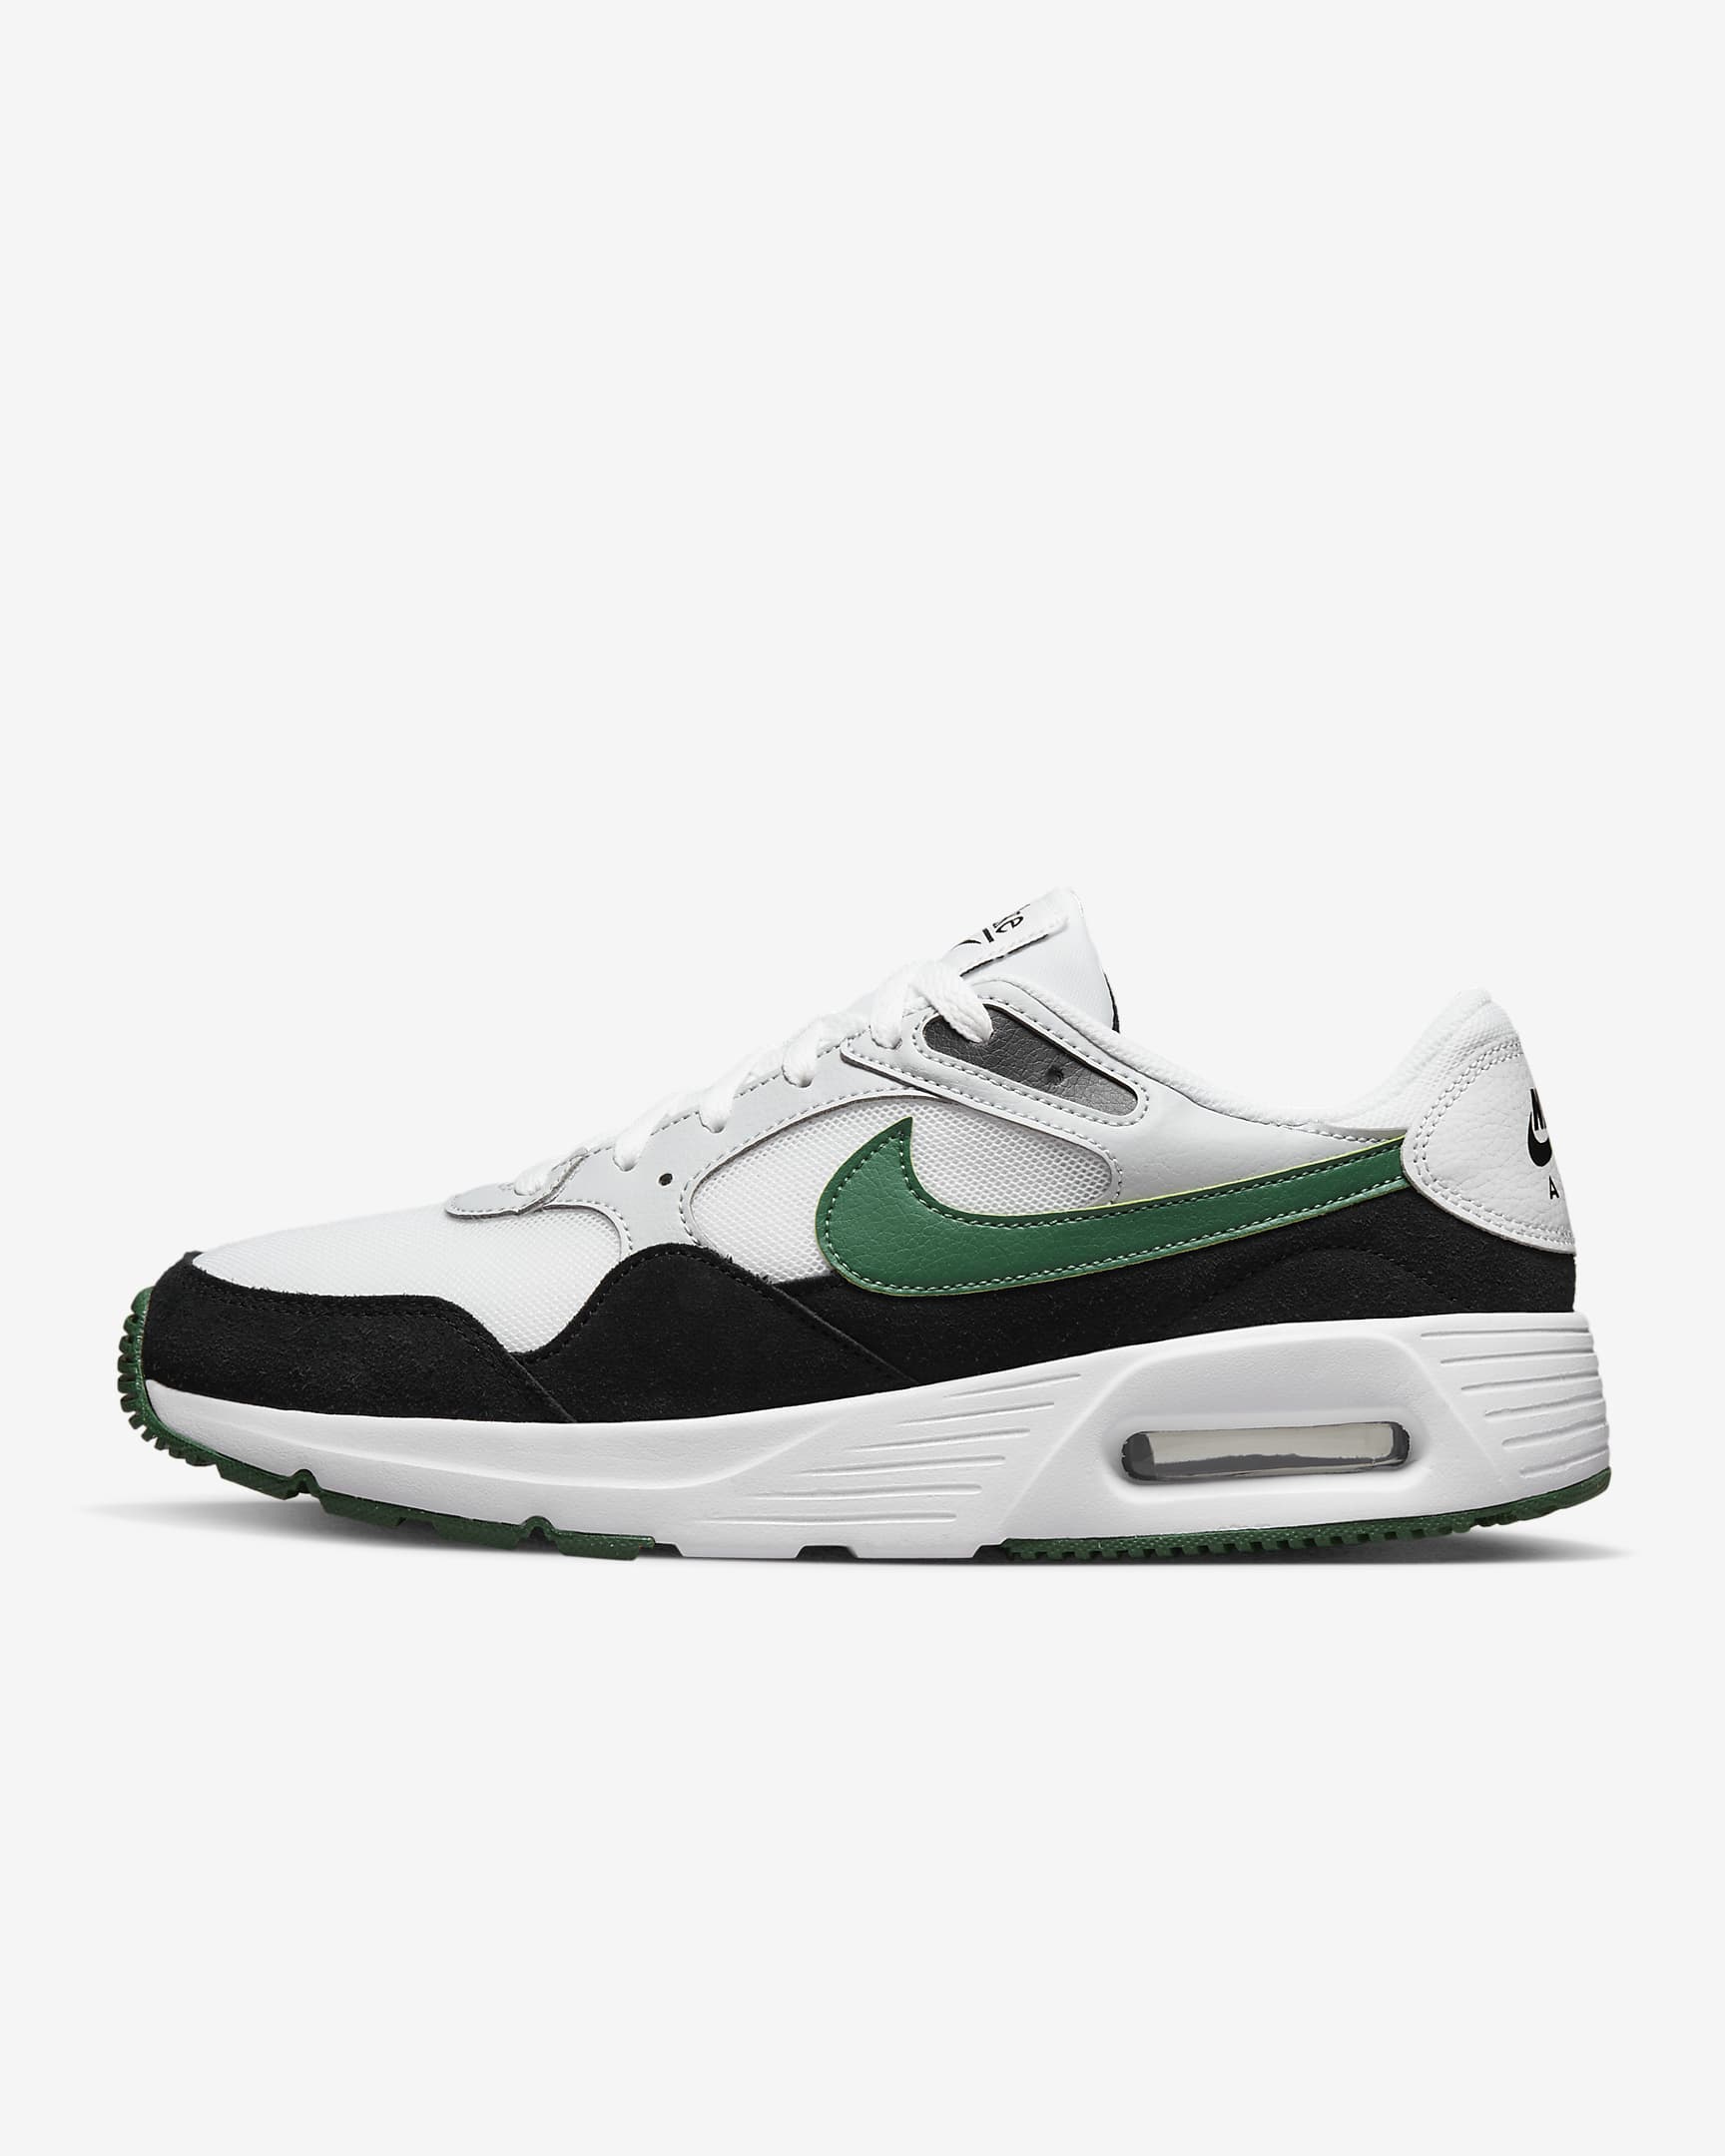 Nike Air Max SC Men's Shoes - White/Black/Pure Platinum/Gorge Green